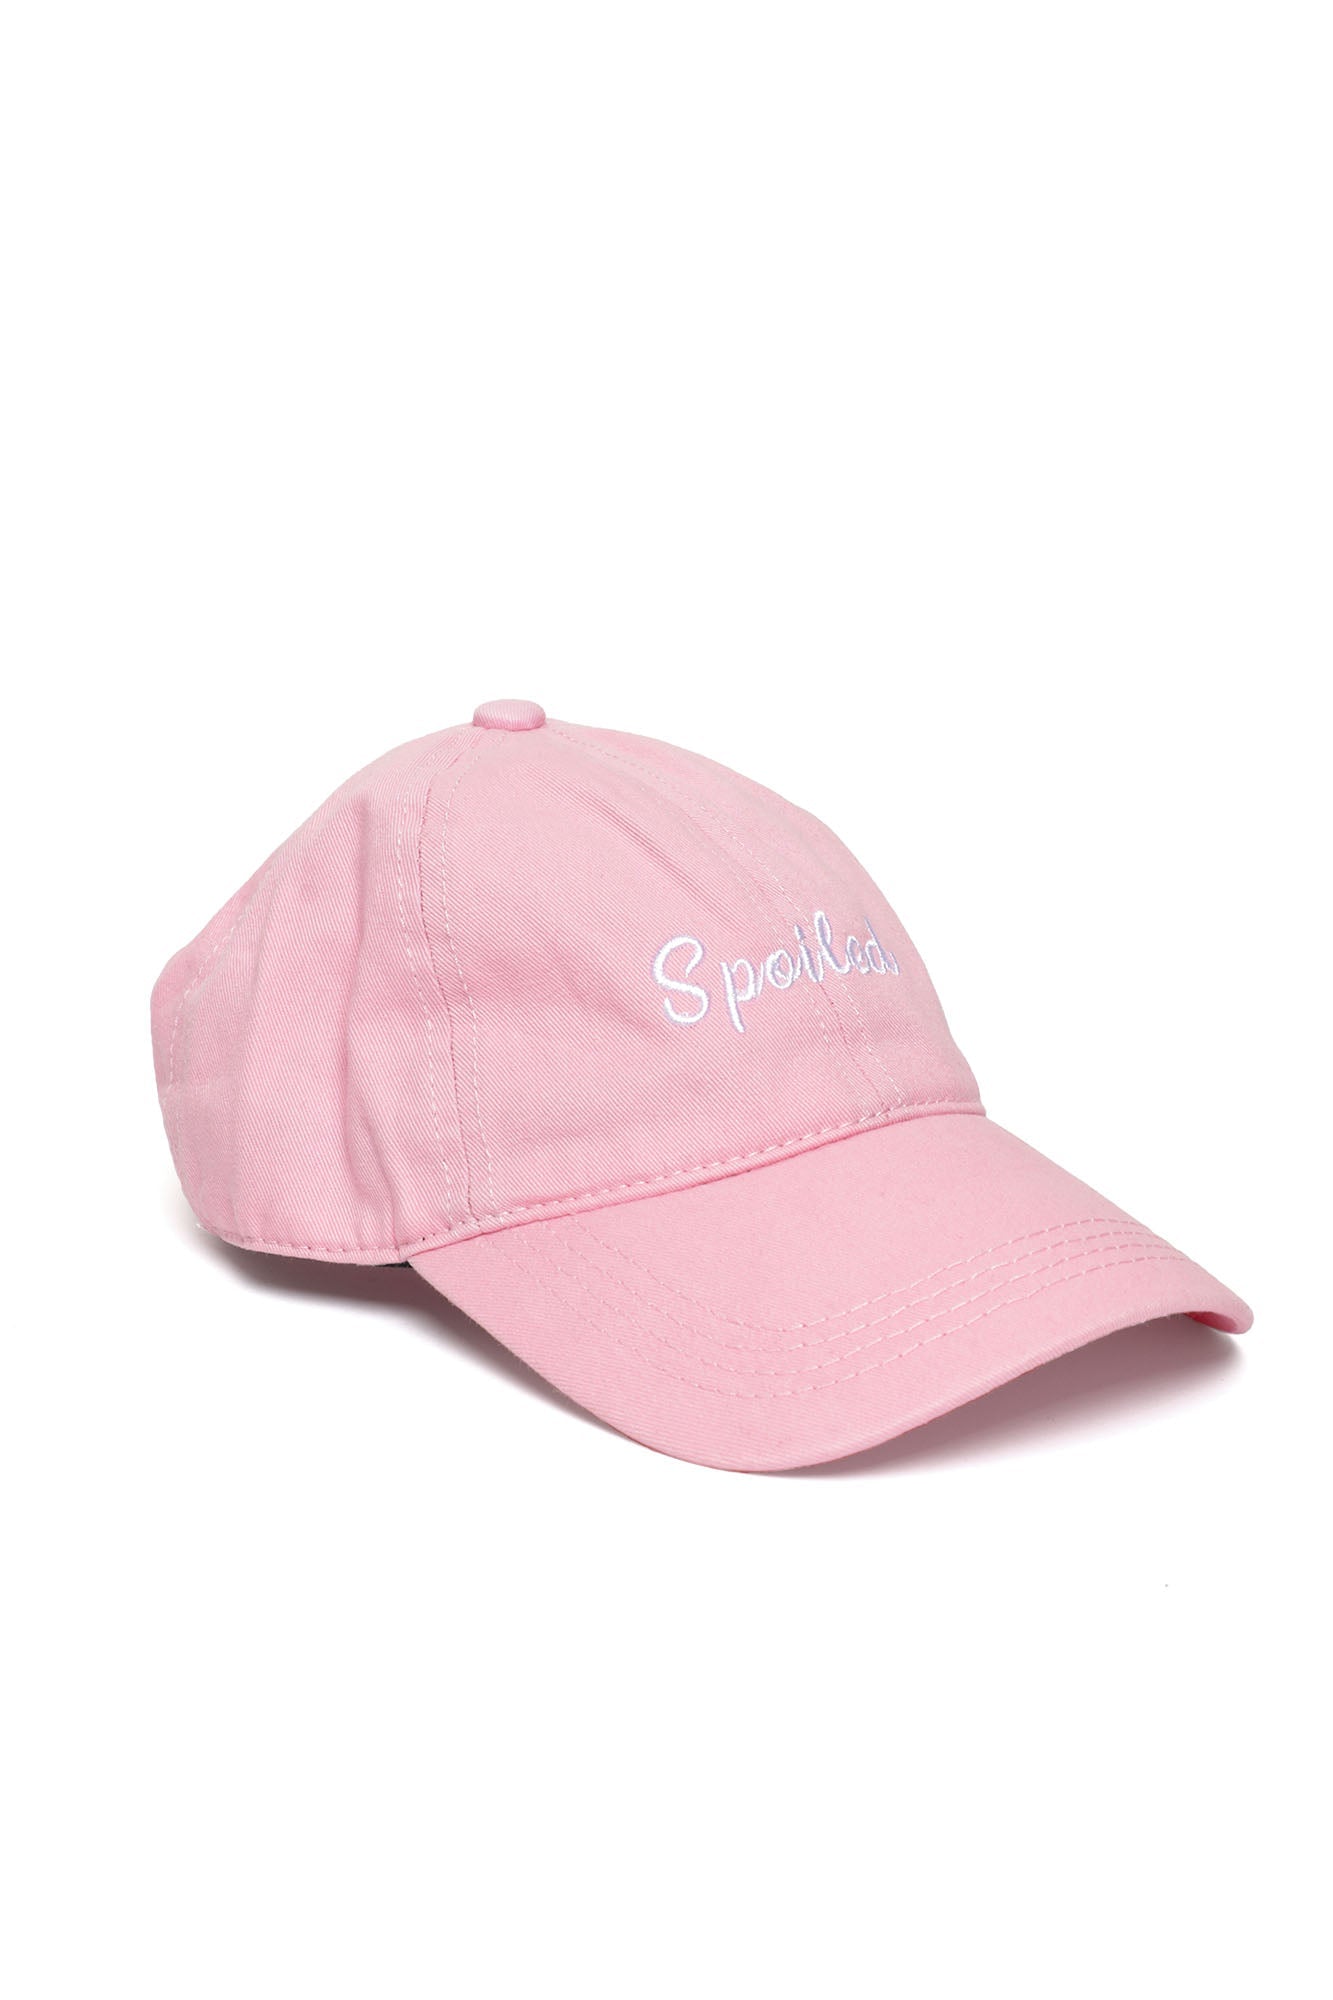 Baby Pink "Spoiled" Baseball Cap